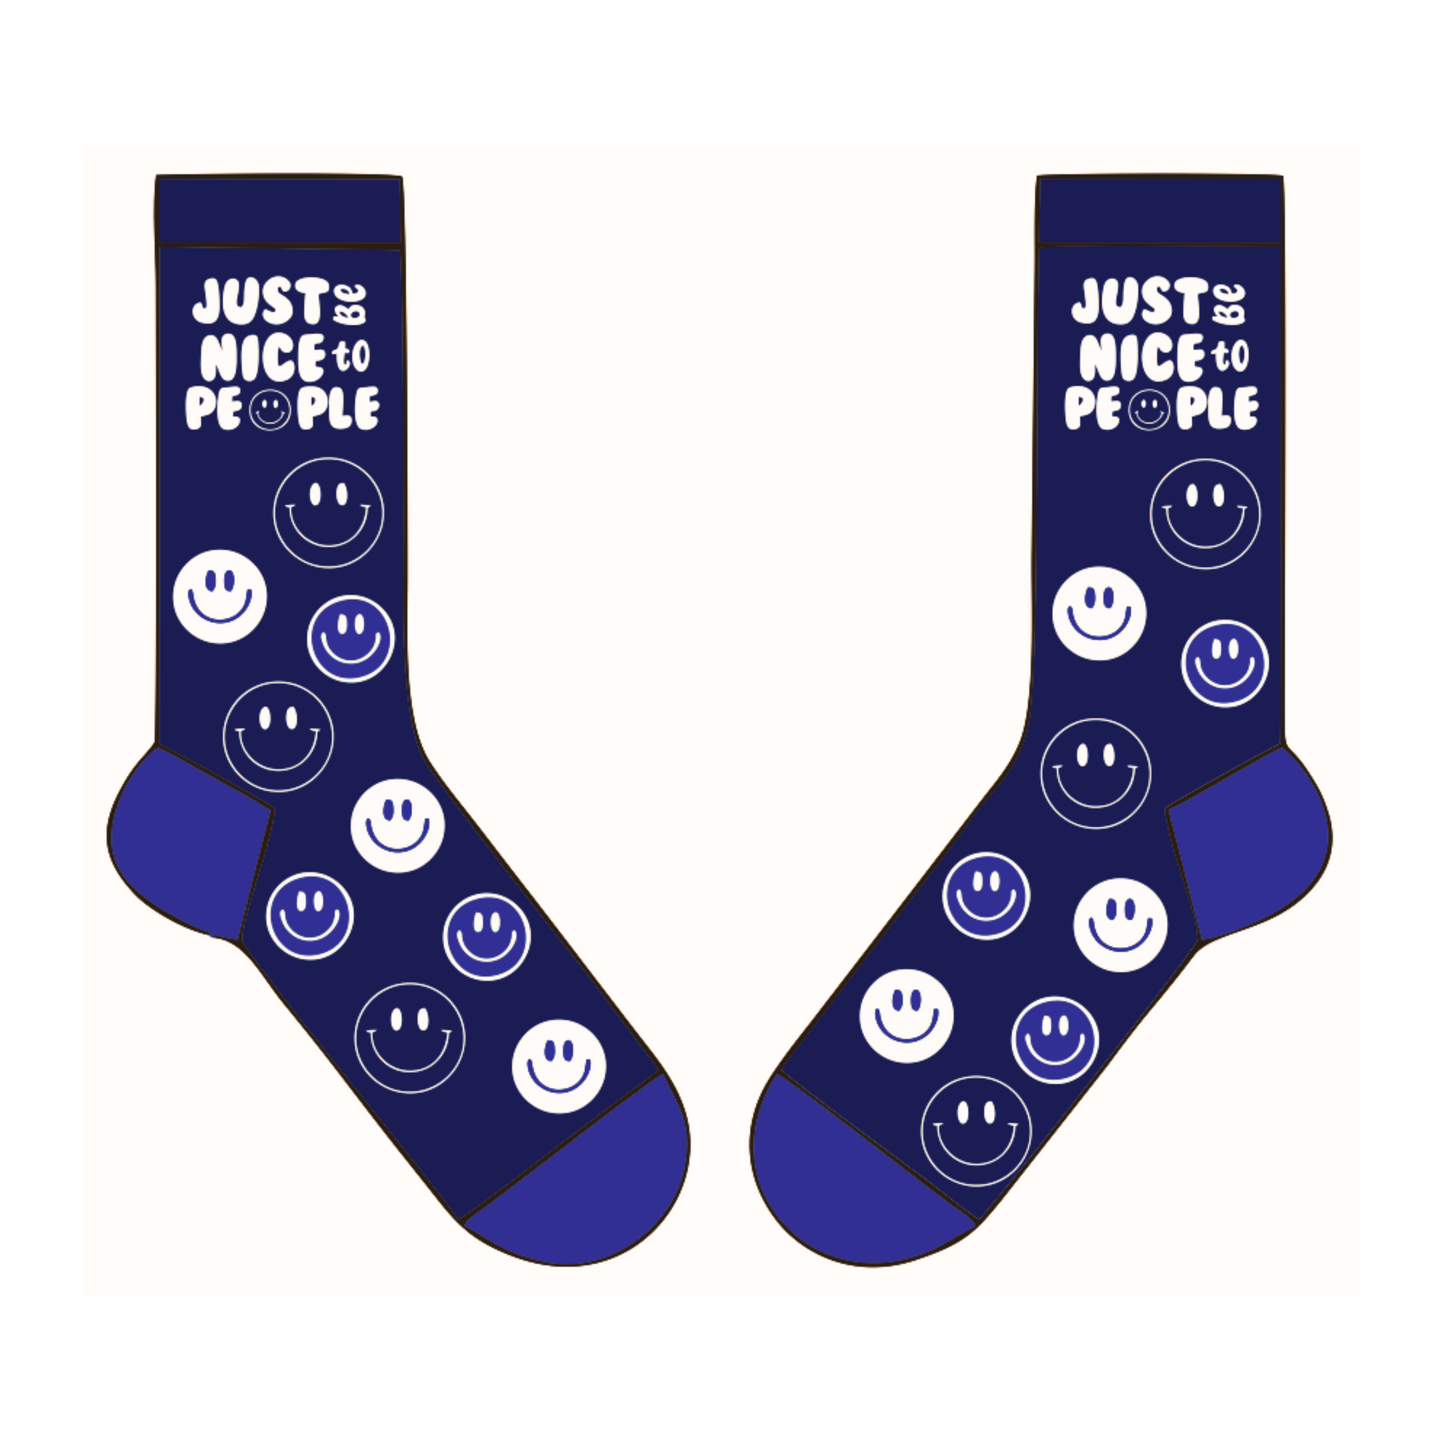 Just Be Nice Socks